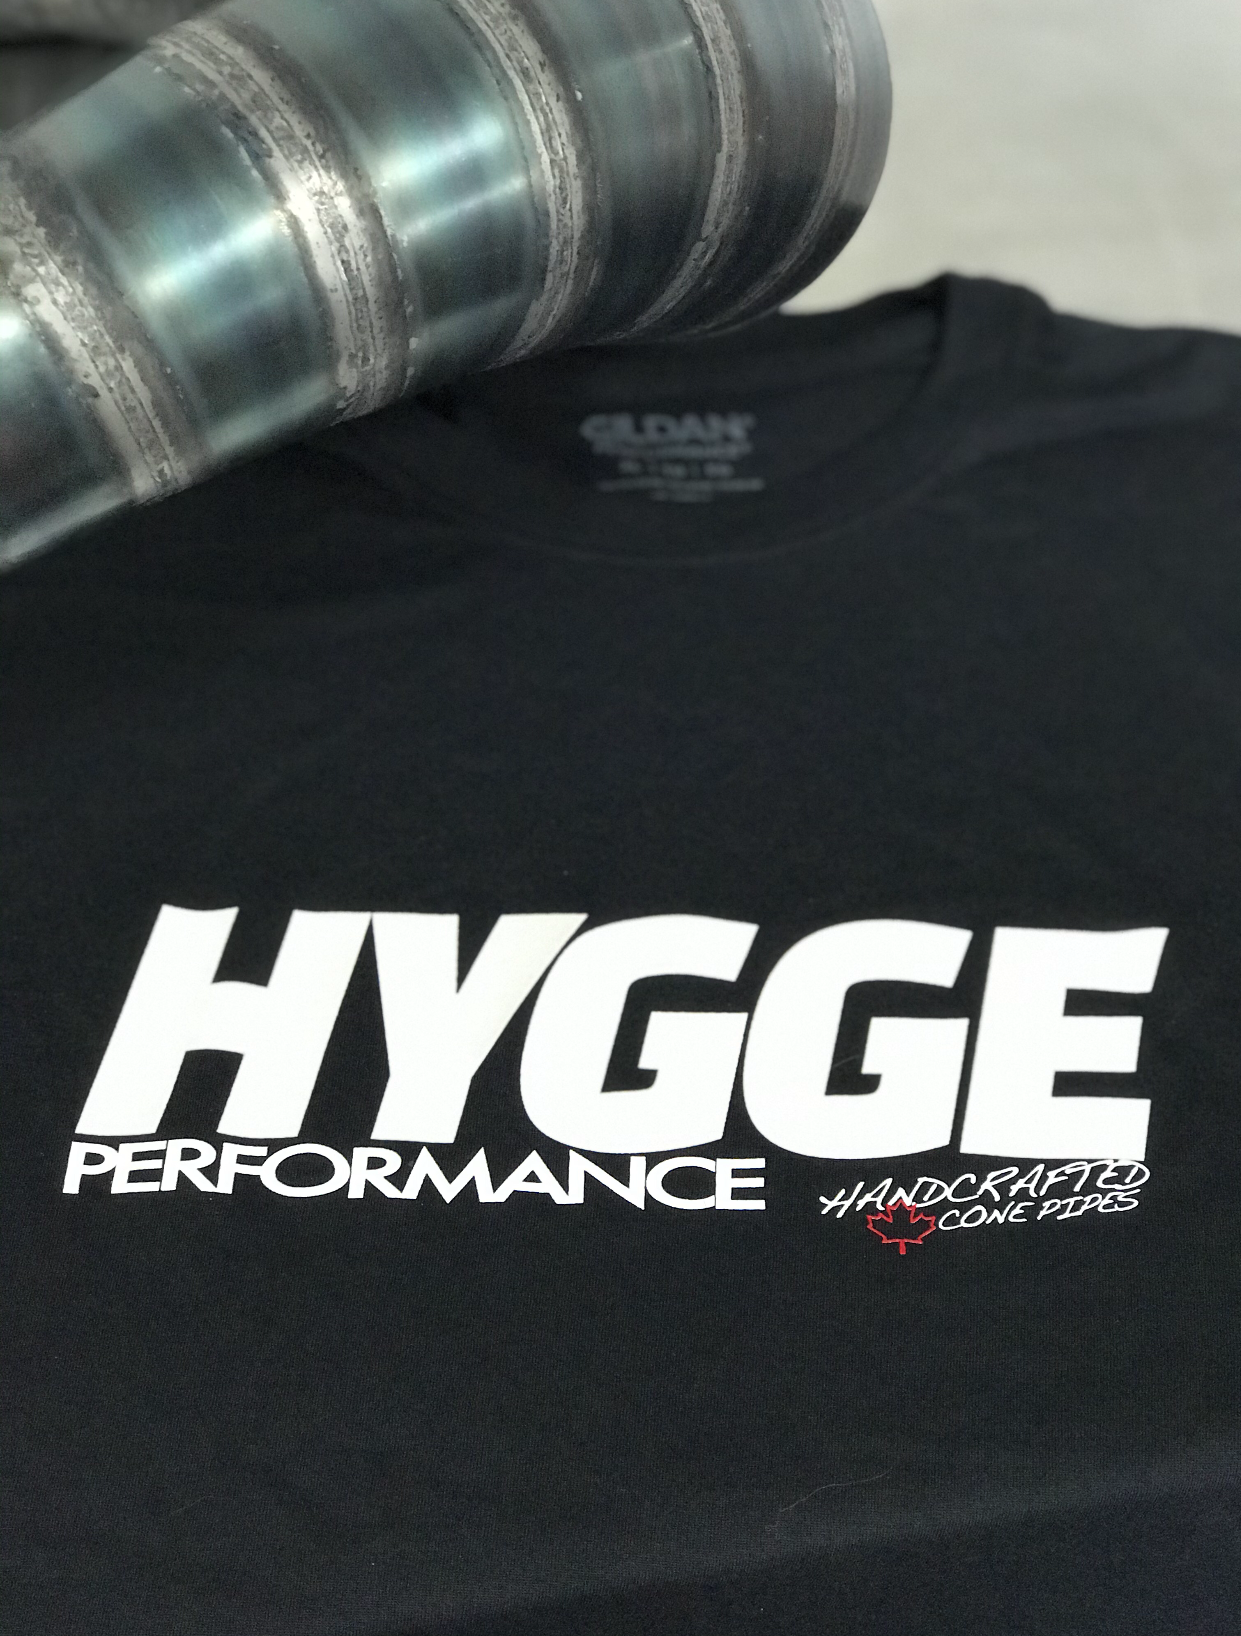 HYGGE Performance Shirt